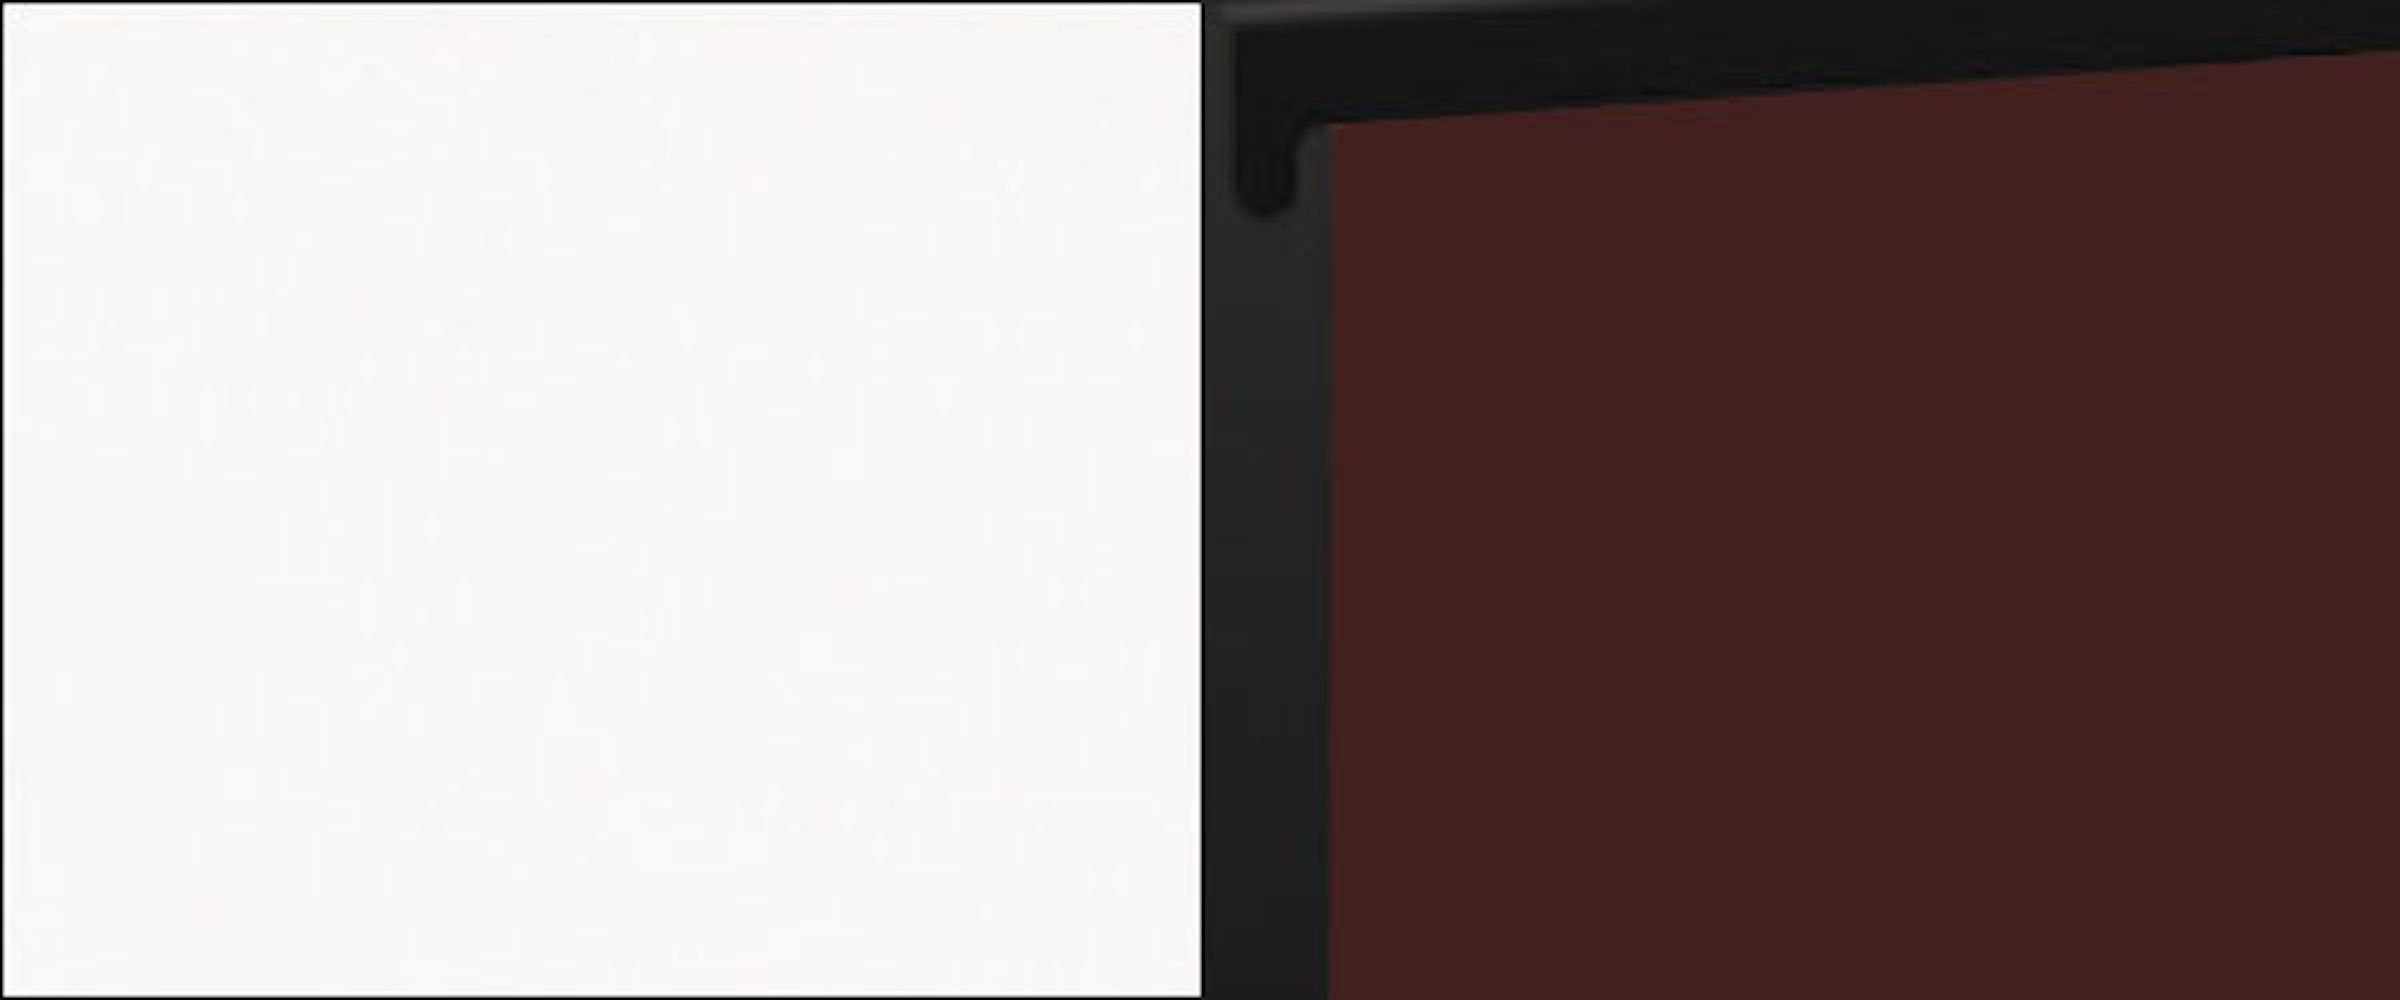 (Teilauszug) & 2 super Backofenumbauschrank 60cm Velden Schubladen Front- Feldmann-Wohnen wählbar rubinrot matt grifflos Korpusfarbe